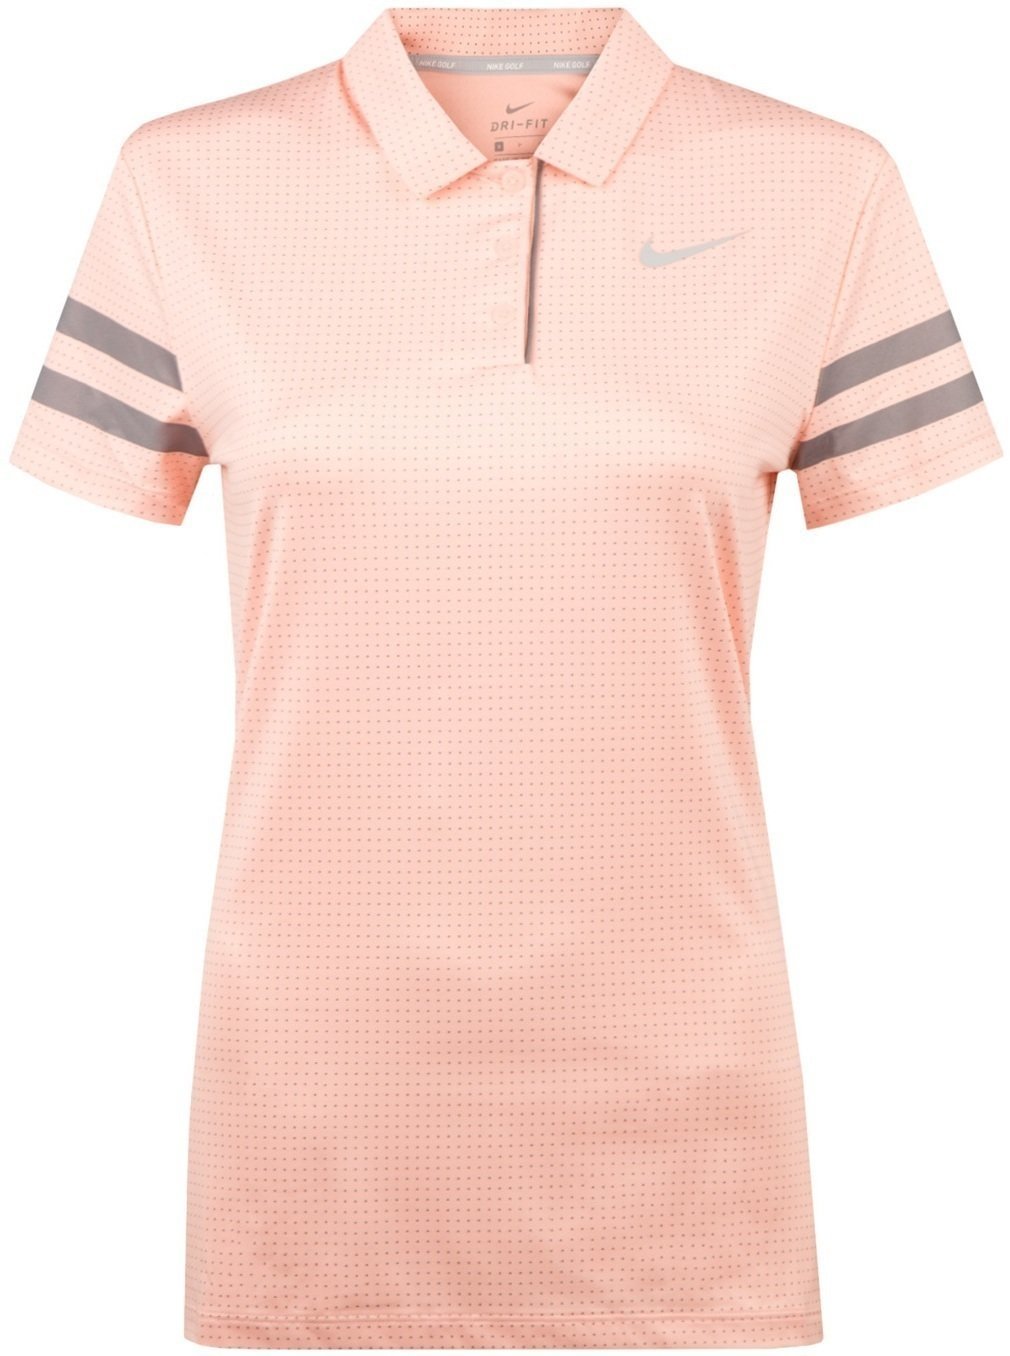 Camiseta polo Nike Dri-Fit Printed Womens Polo Storm Pink/Anthracite/White M